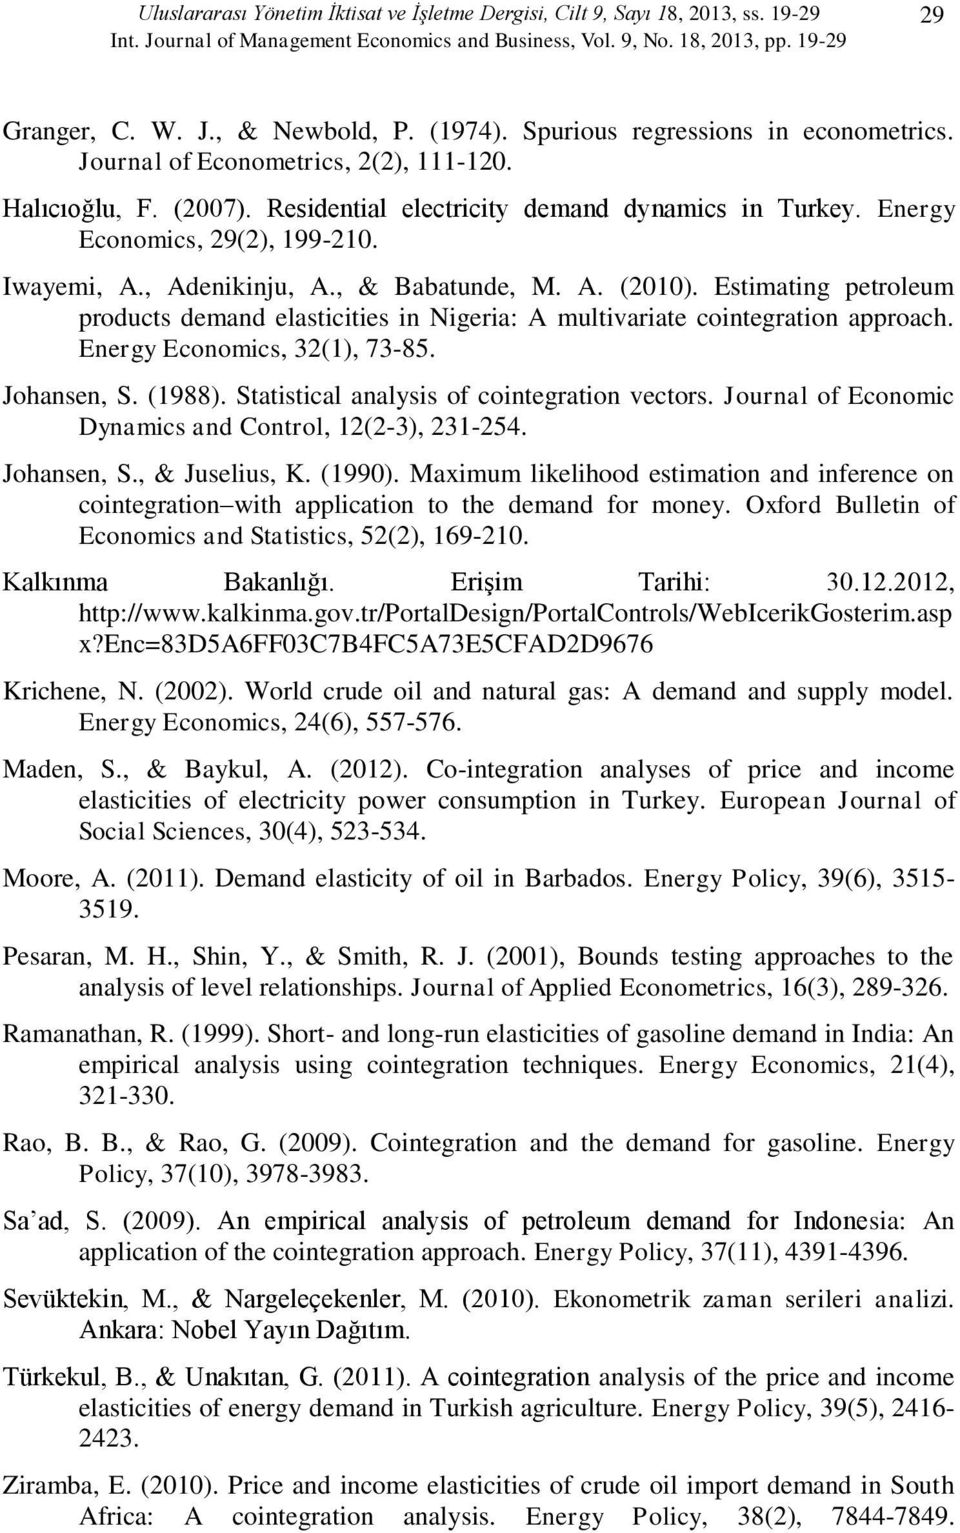 Iwayemi, A., Adenikinju, A., & Babatunde, M. A. (2010). Estimating petroleum products demand elasticities in Nigeria: A multivariate cointegration approach. Energy Economics, 32(1), 73-85.